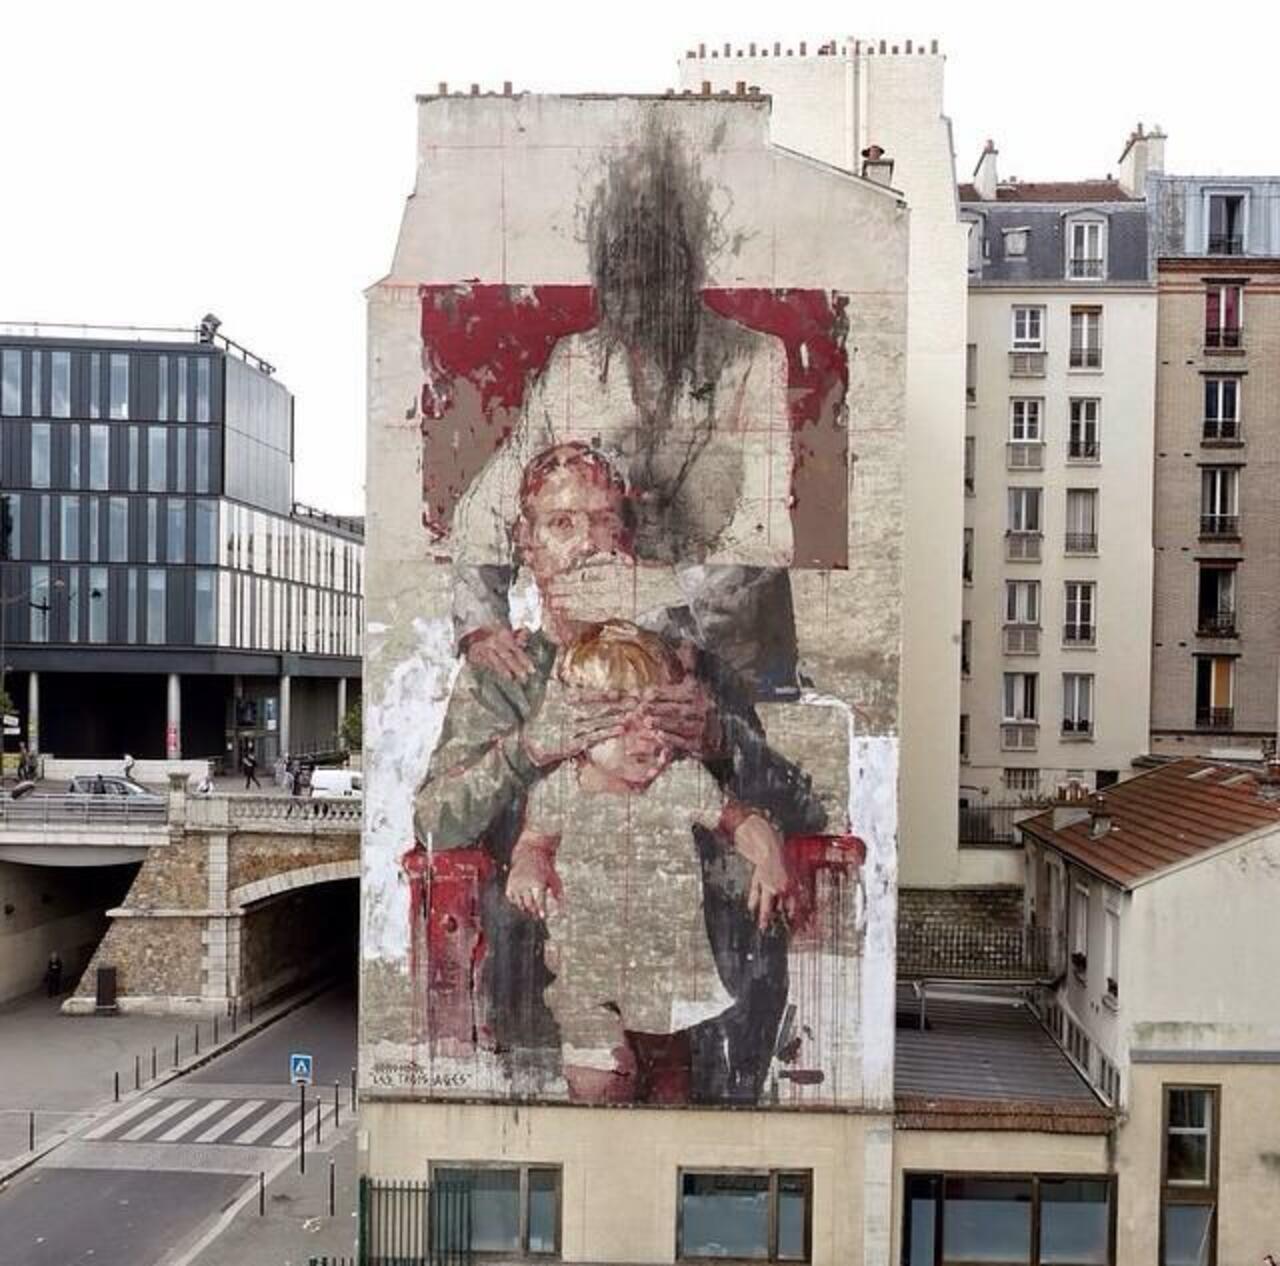 “@GoogleStreetArt: New large scale Street Art by Borondo in Paris, France. 

#art #mural #graffiti #streetart http://t.co/uDDJHu68VH” grand